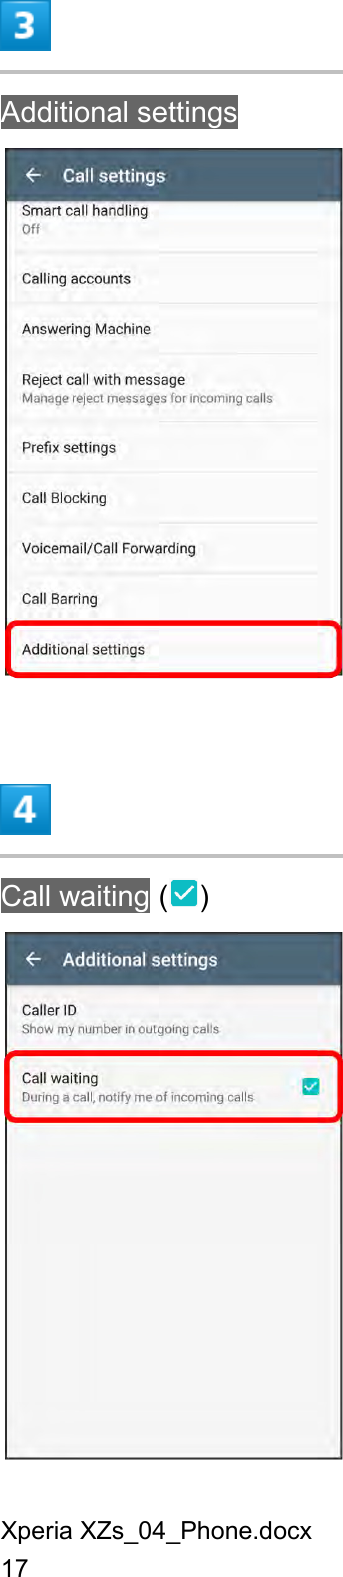 Xperia XZs_04_Phone.docx 17  Additional settings   Call waiting ( )  